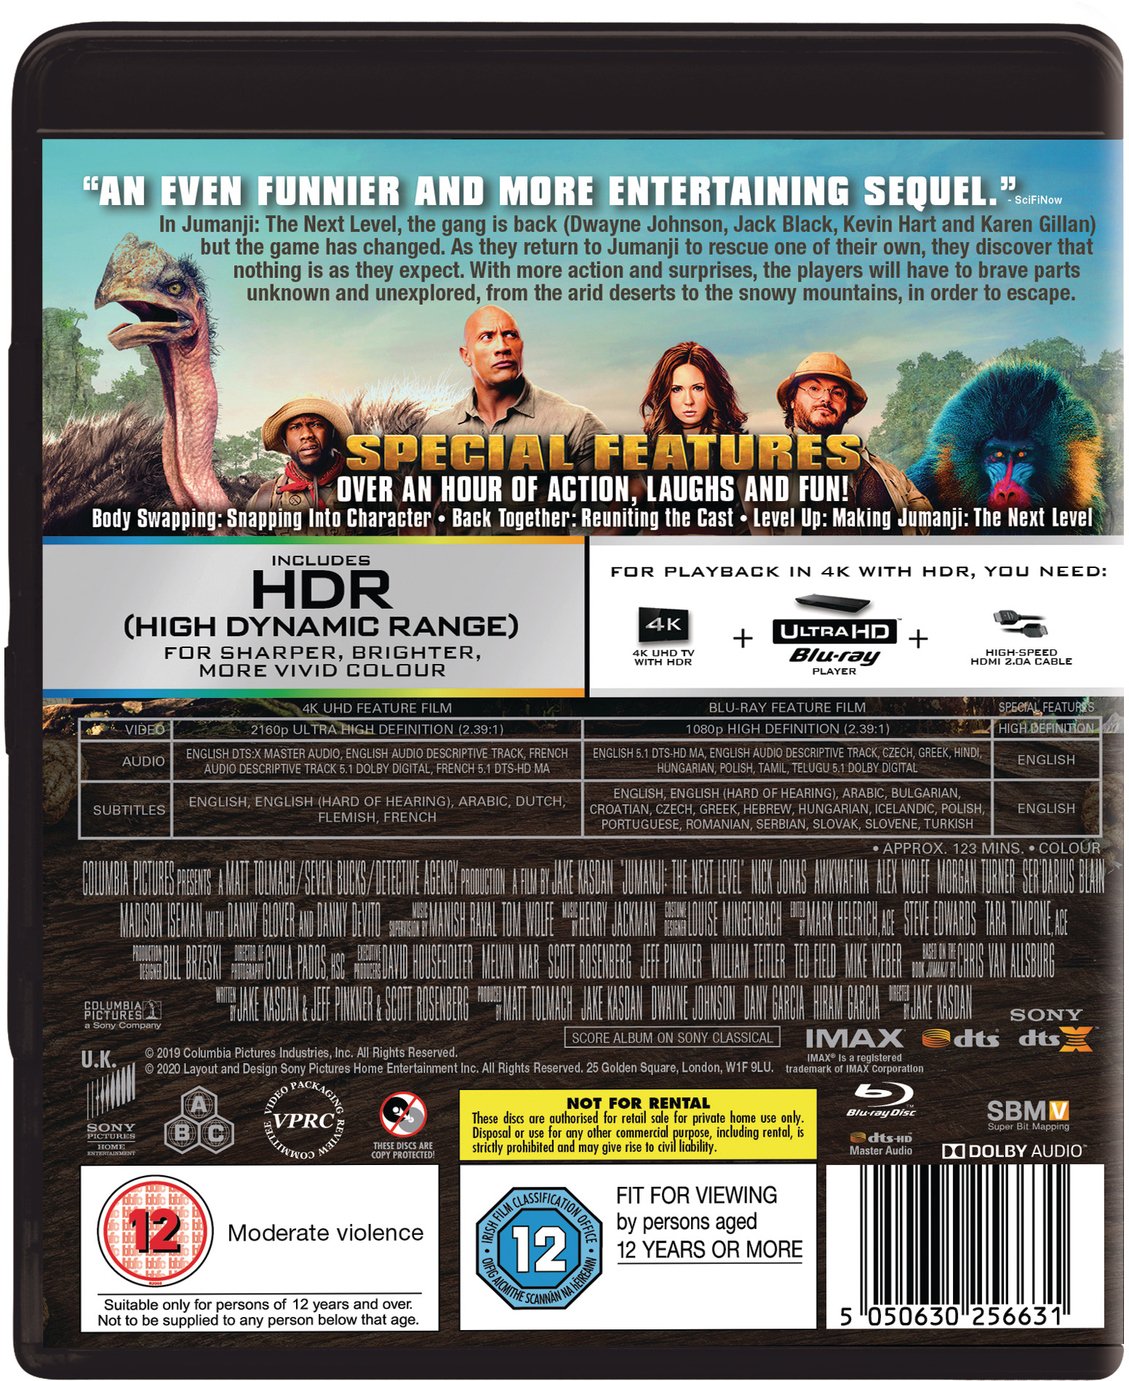 Jumanji: The Next Level 4K UHD Blu-Ray Review